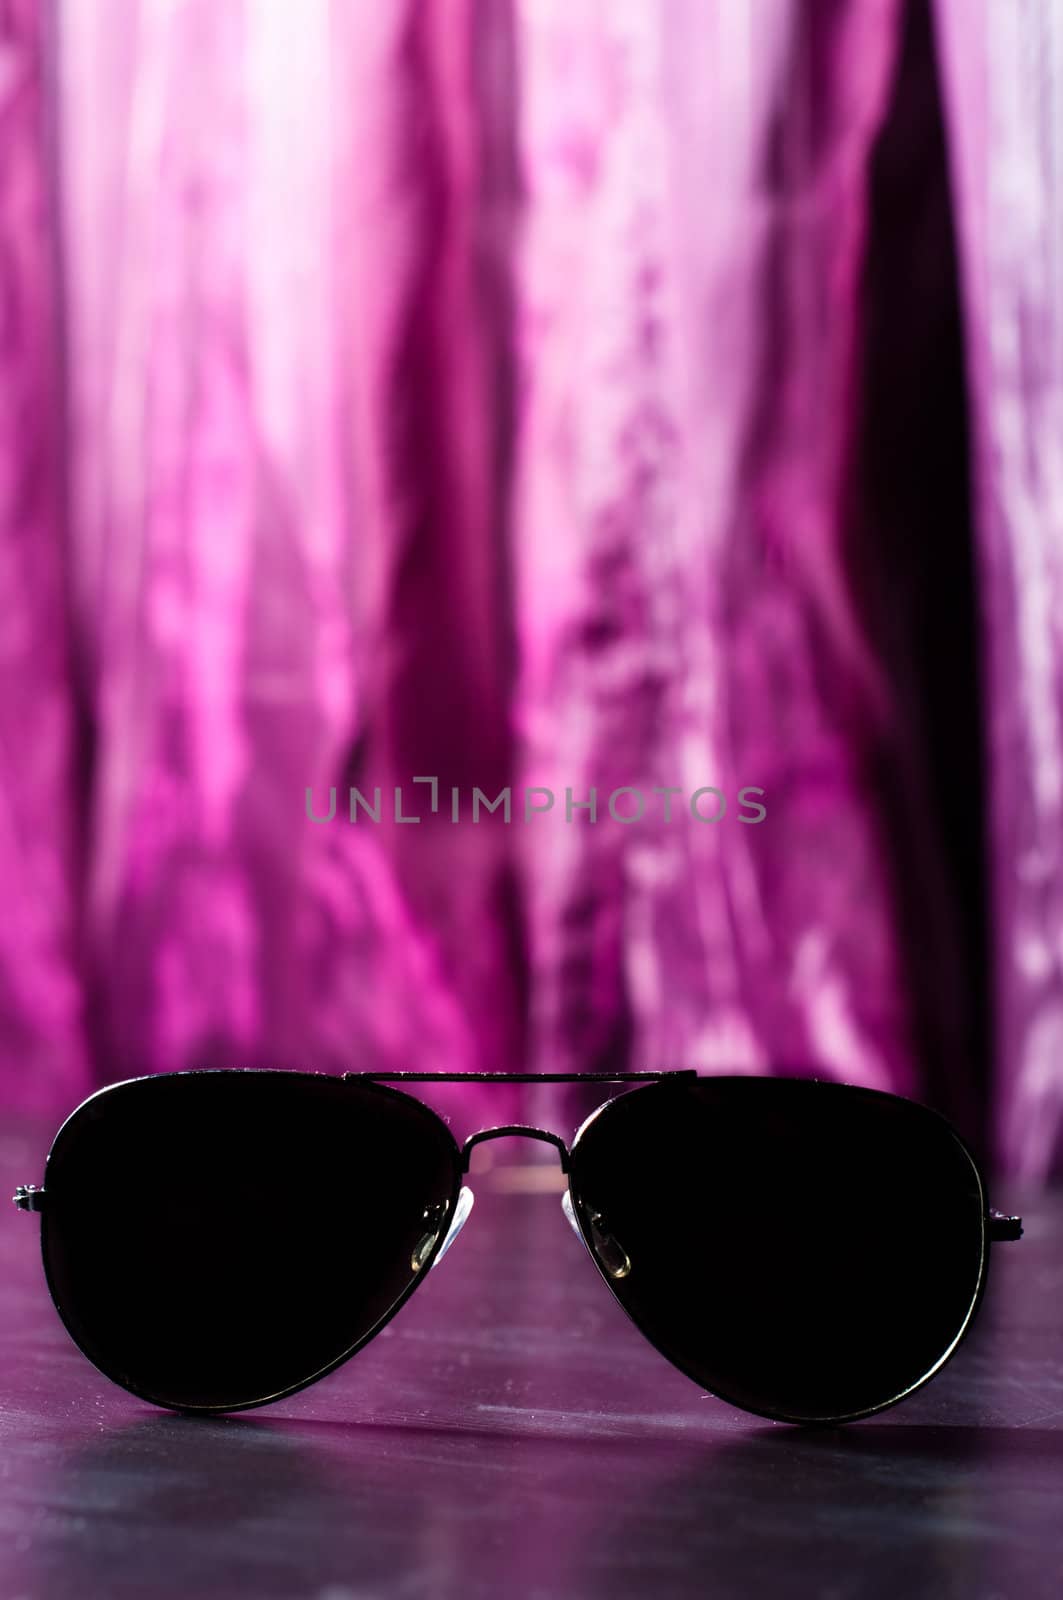 Sunglasses against purple blurry background